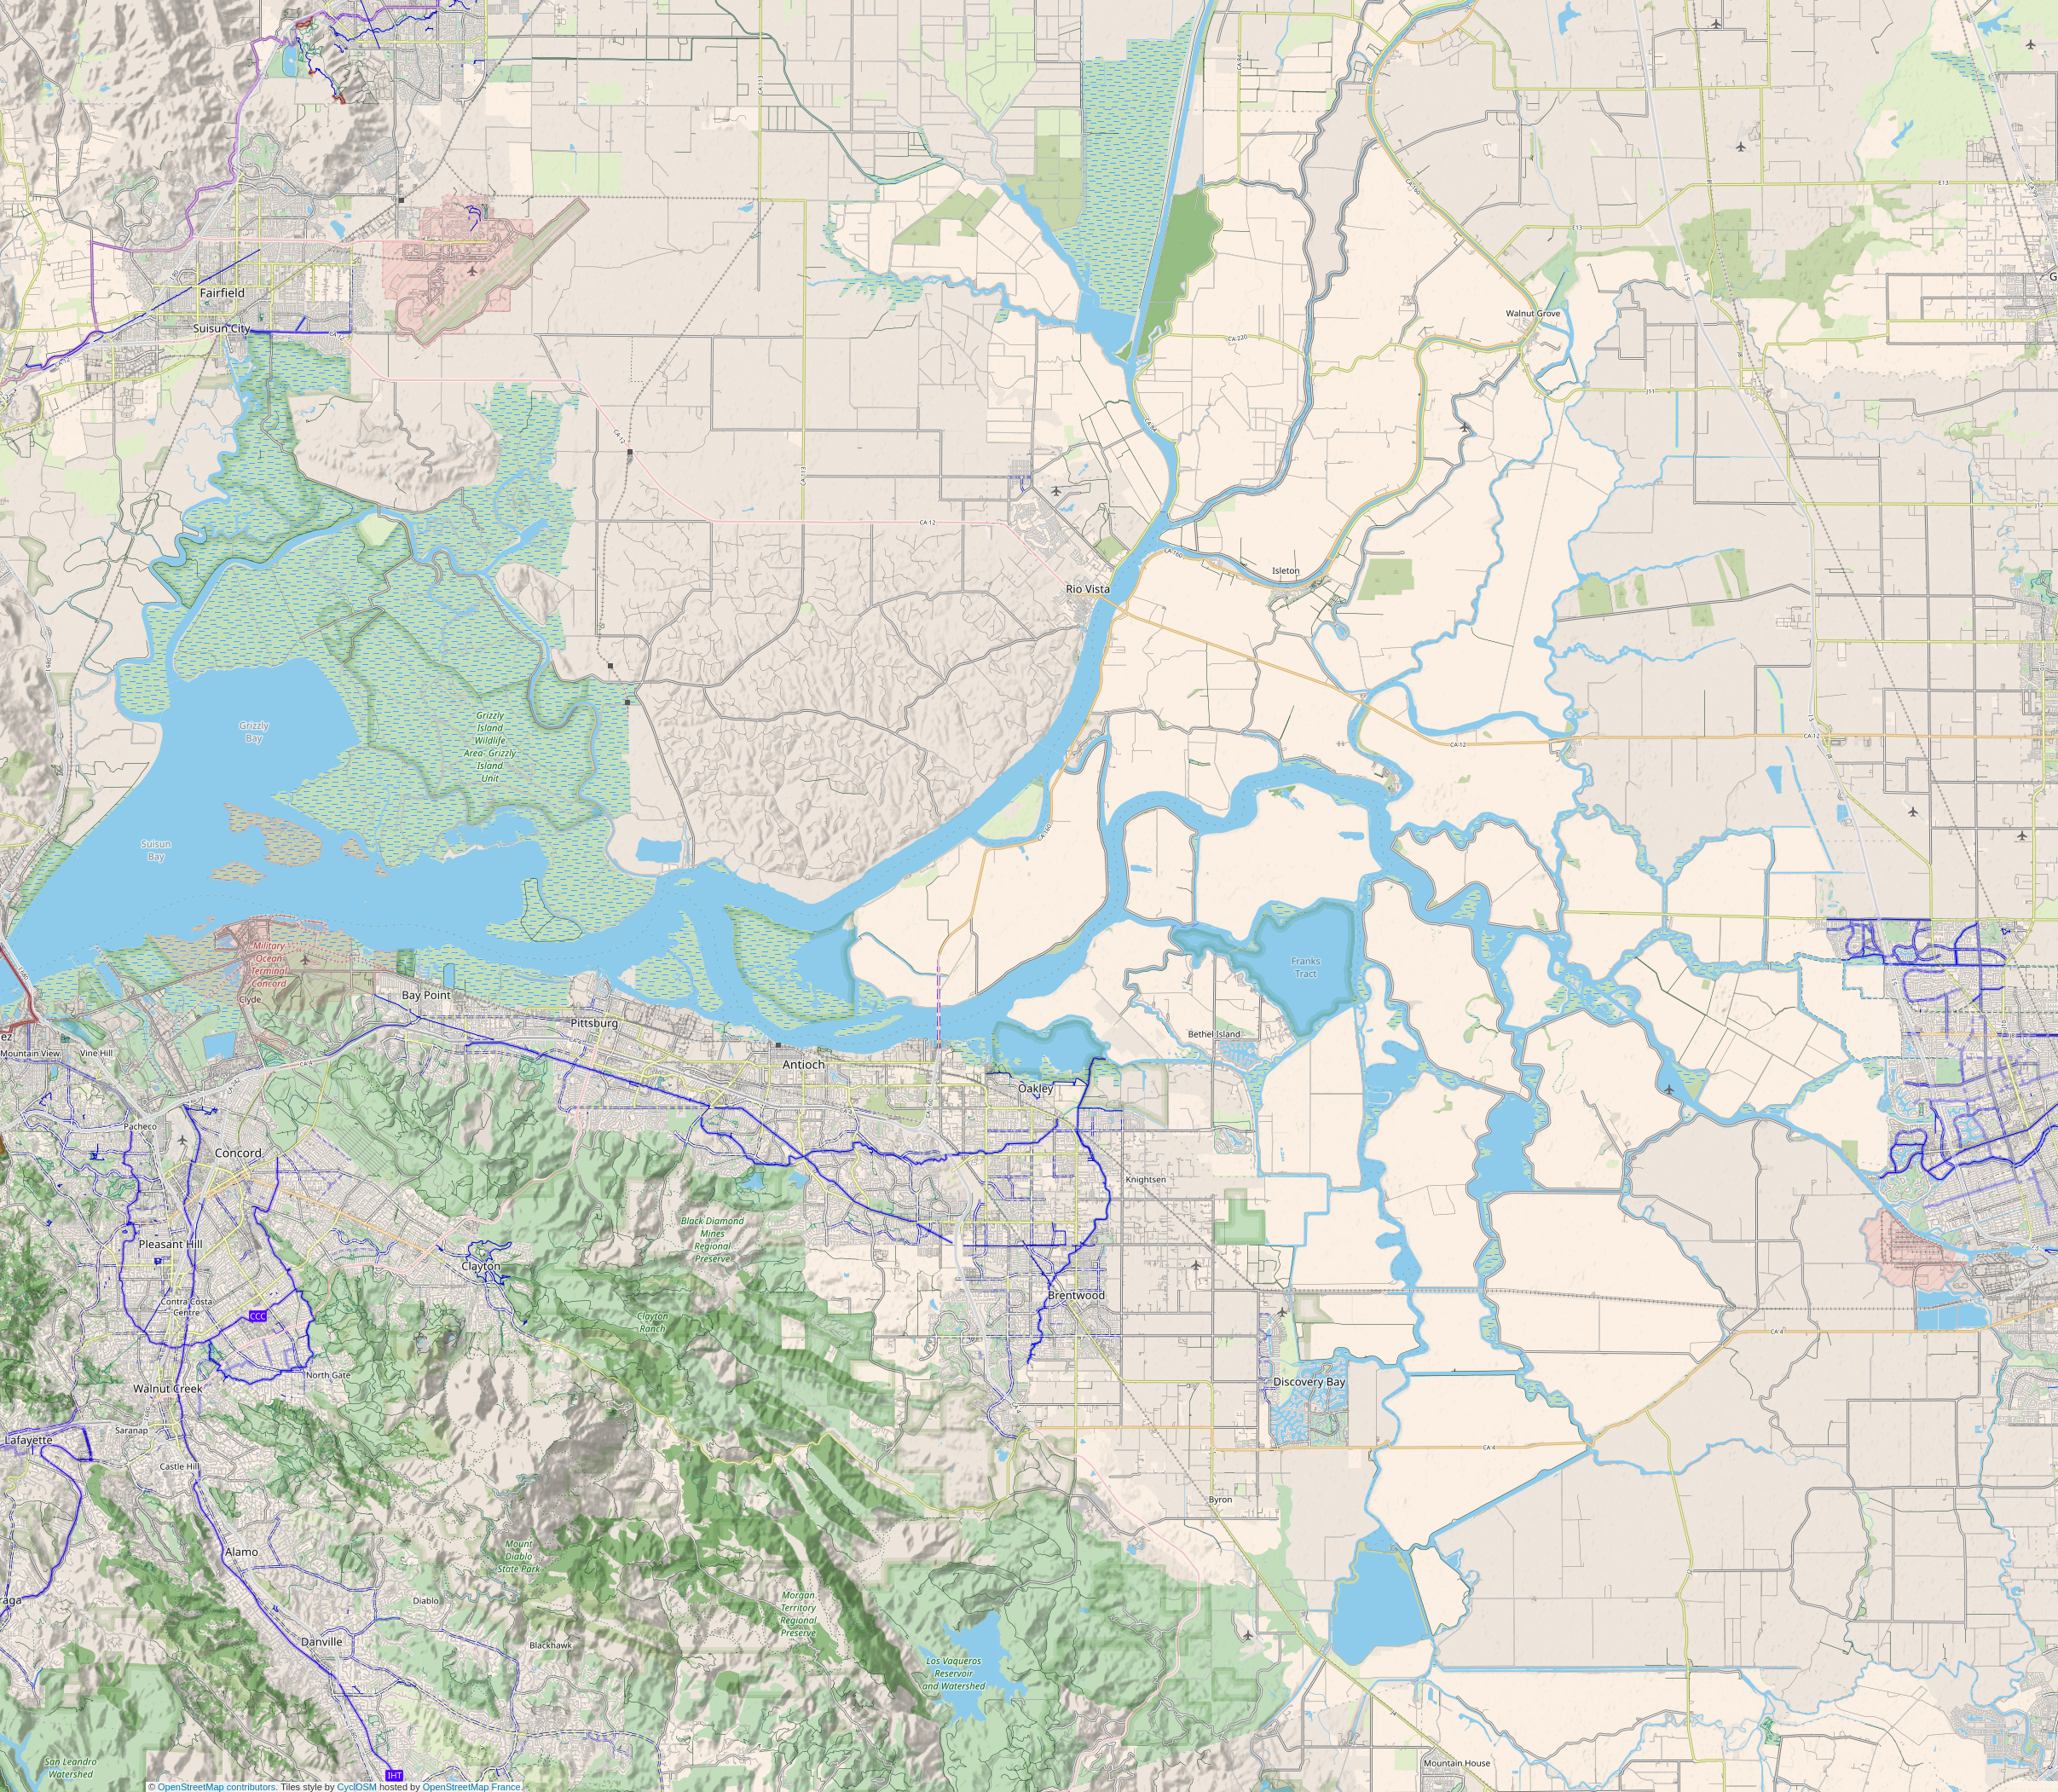 Grizzly Bay is located in Sacramento-San Joaquin River Delta